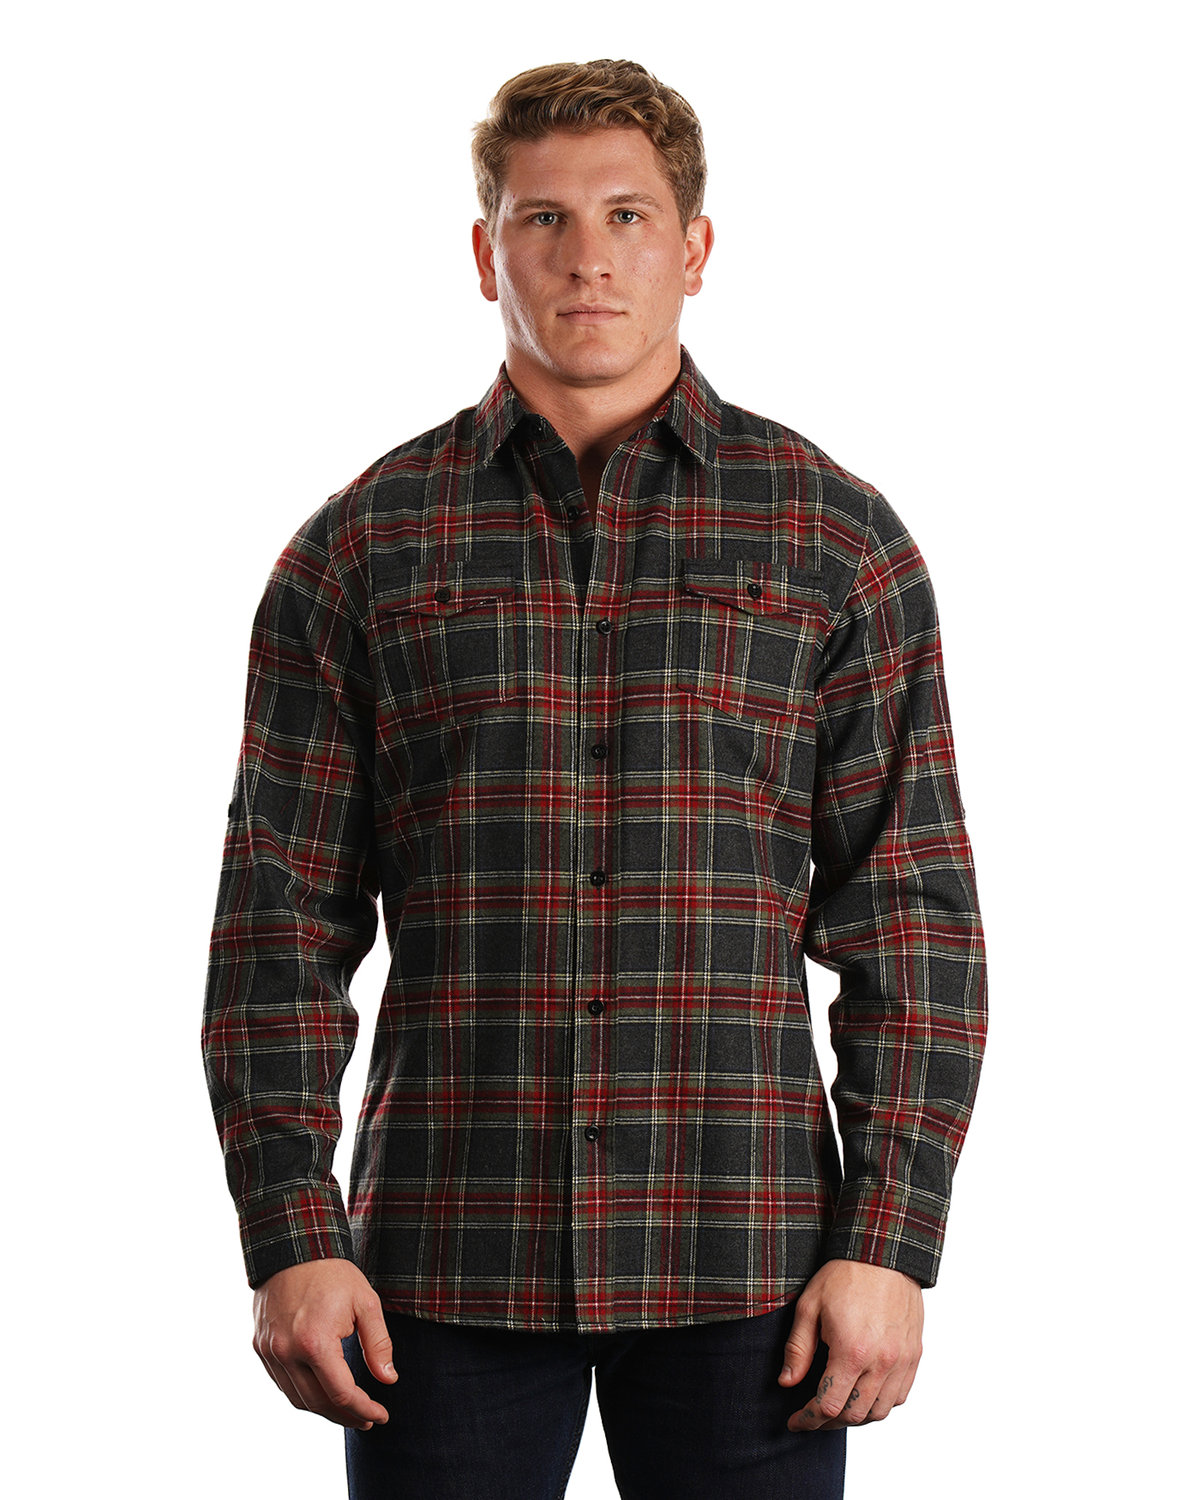 Burnside Men's Plaid Flannel Shirt GREY/ RED 